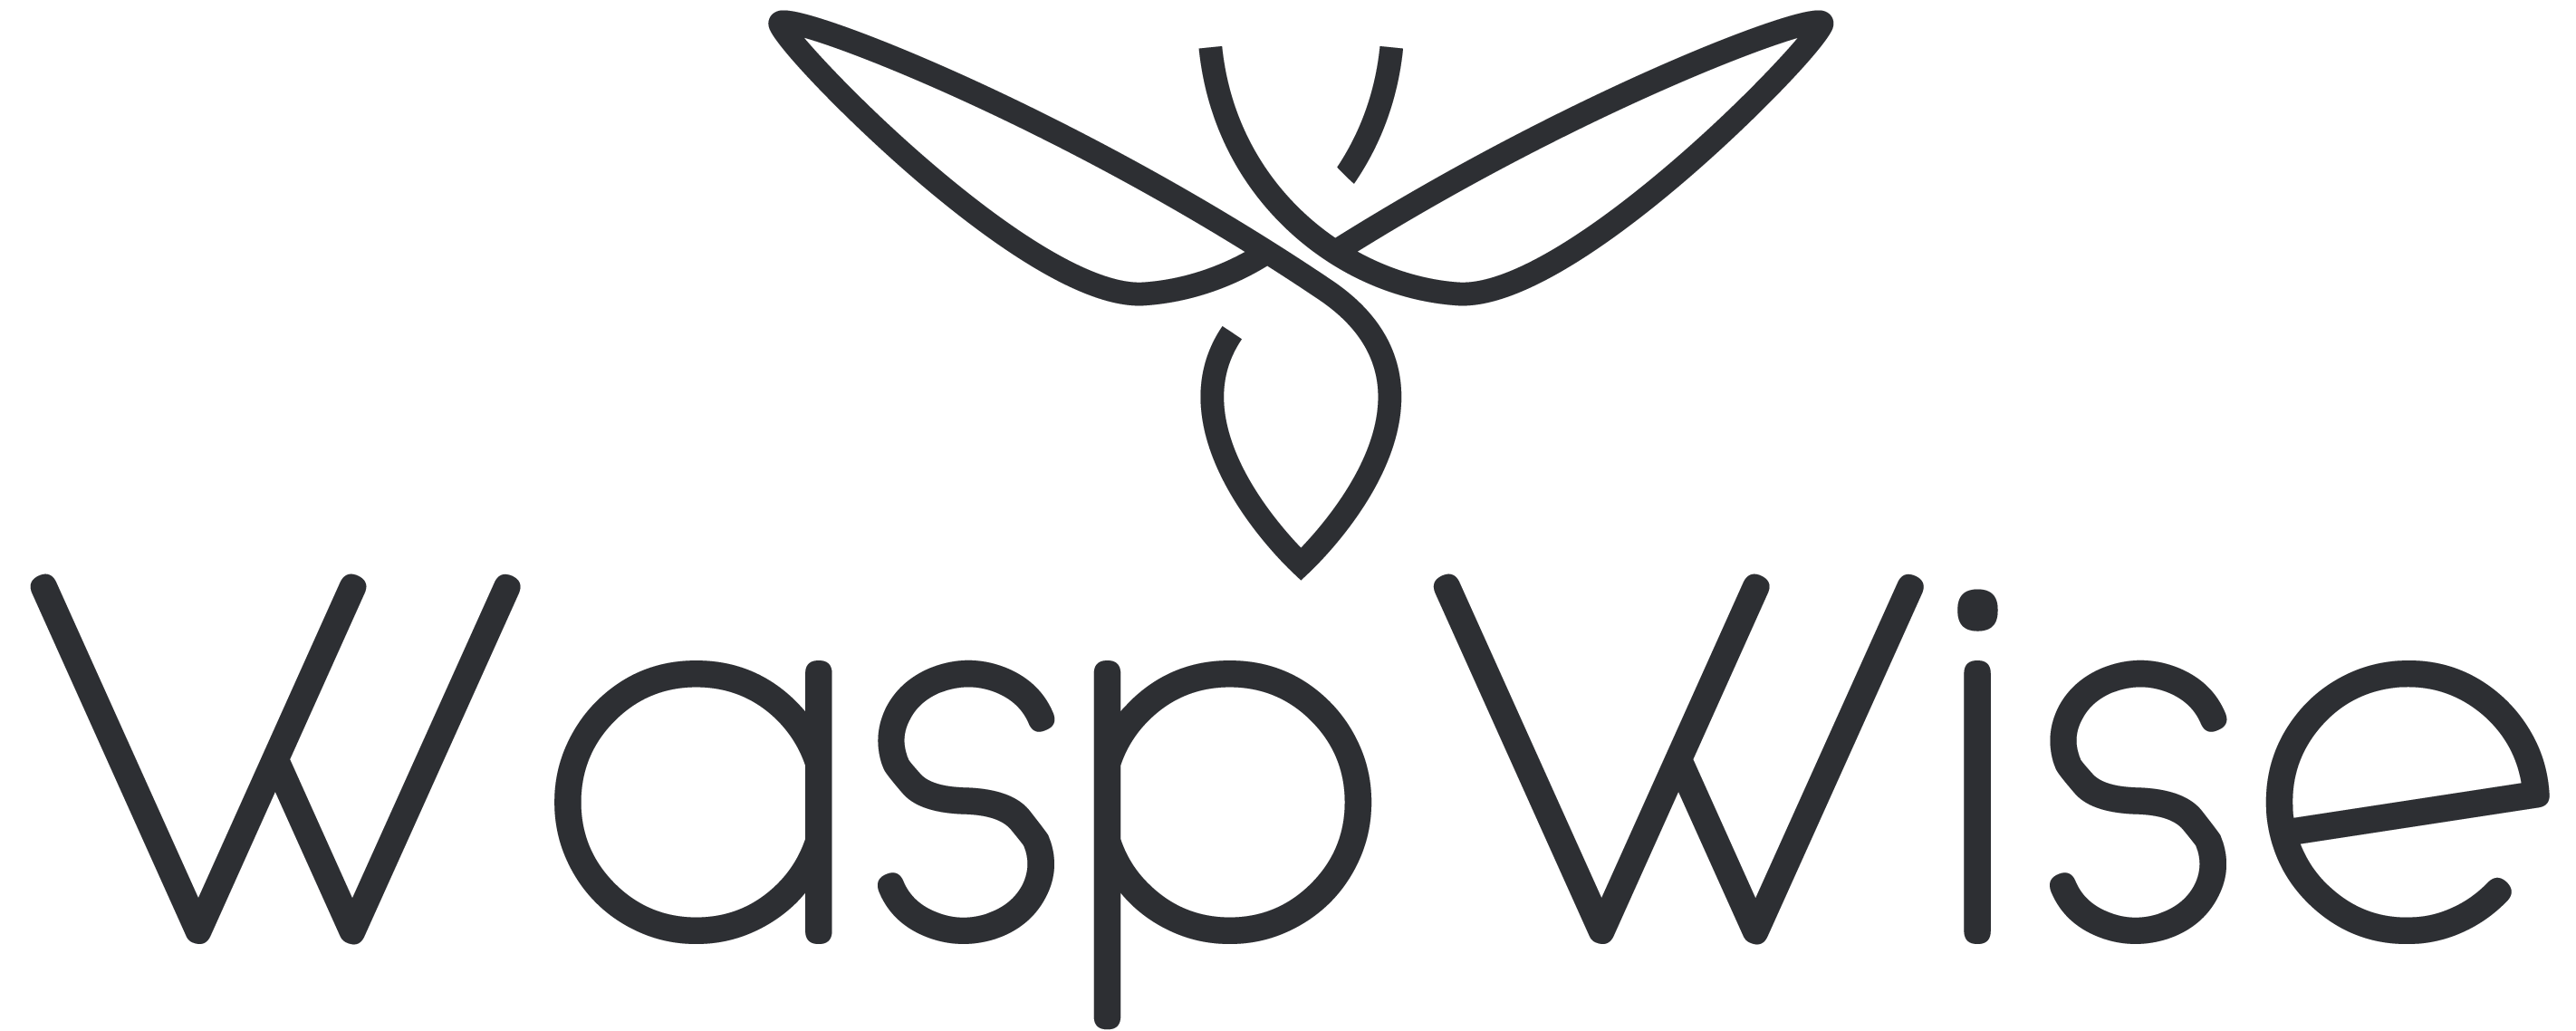 wasp wise logo